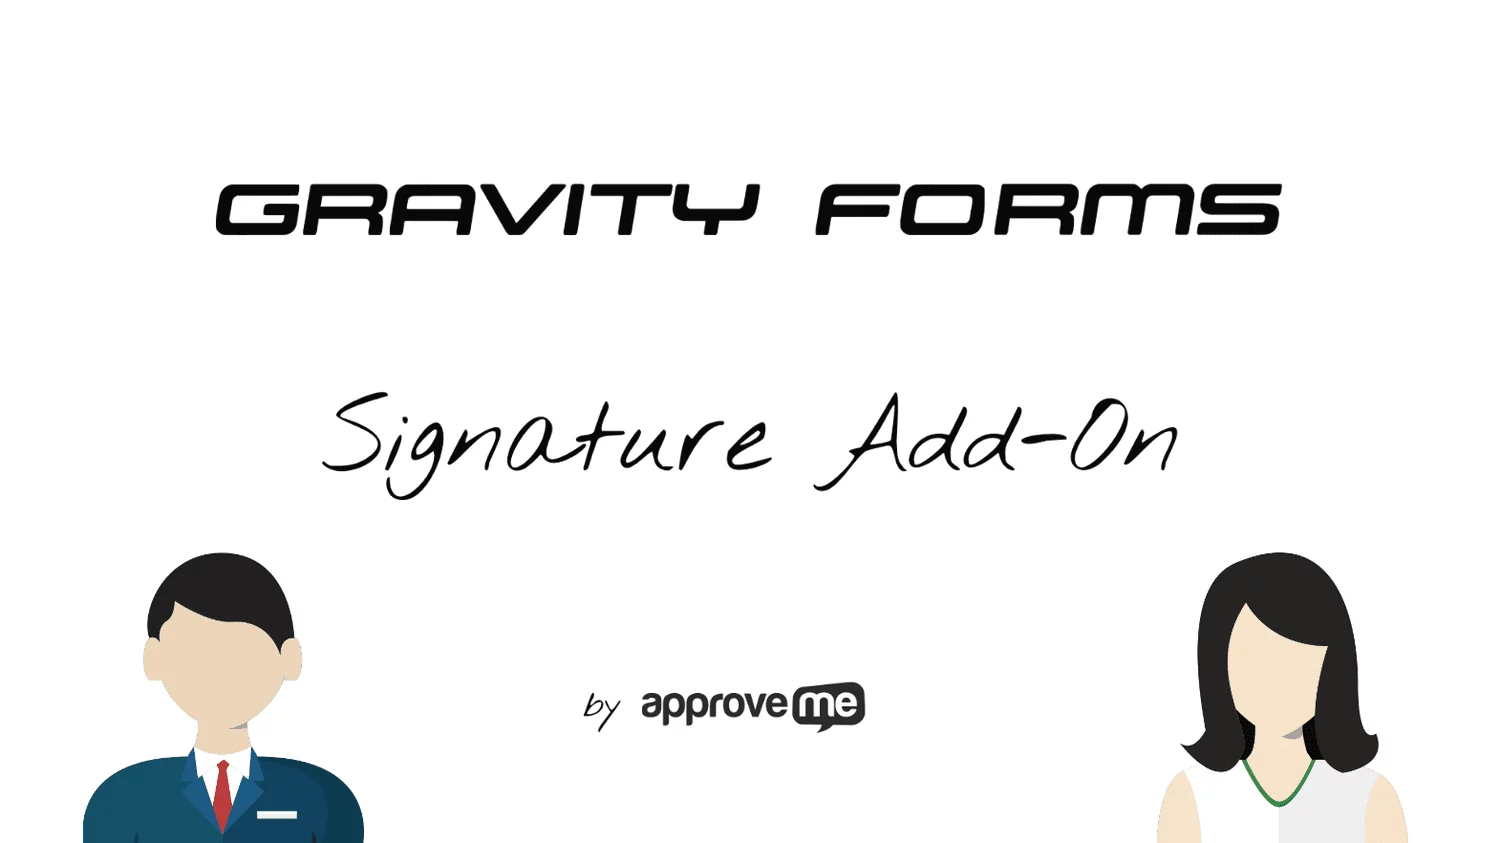 Gravity Forms Signature Addon